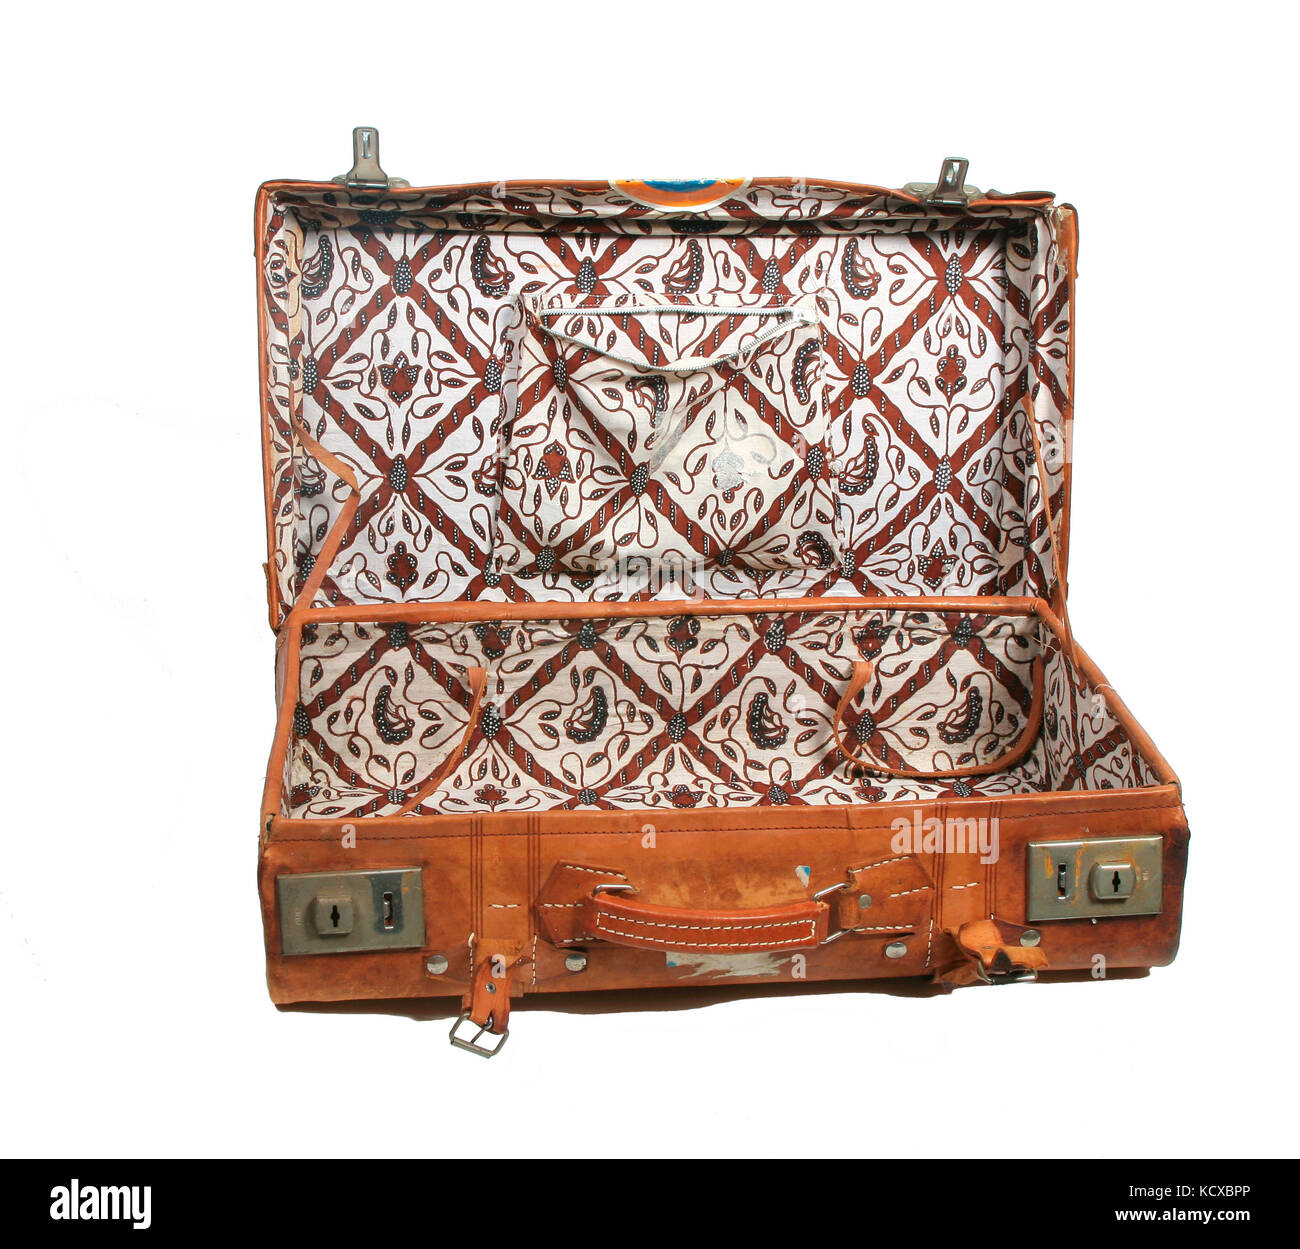 Open vintage leather suitcase with batik lining on white Stock Photo